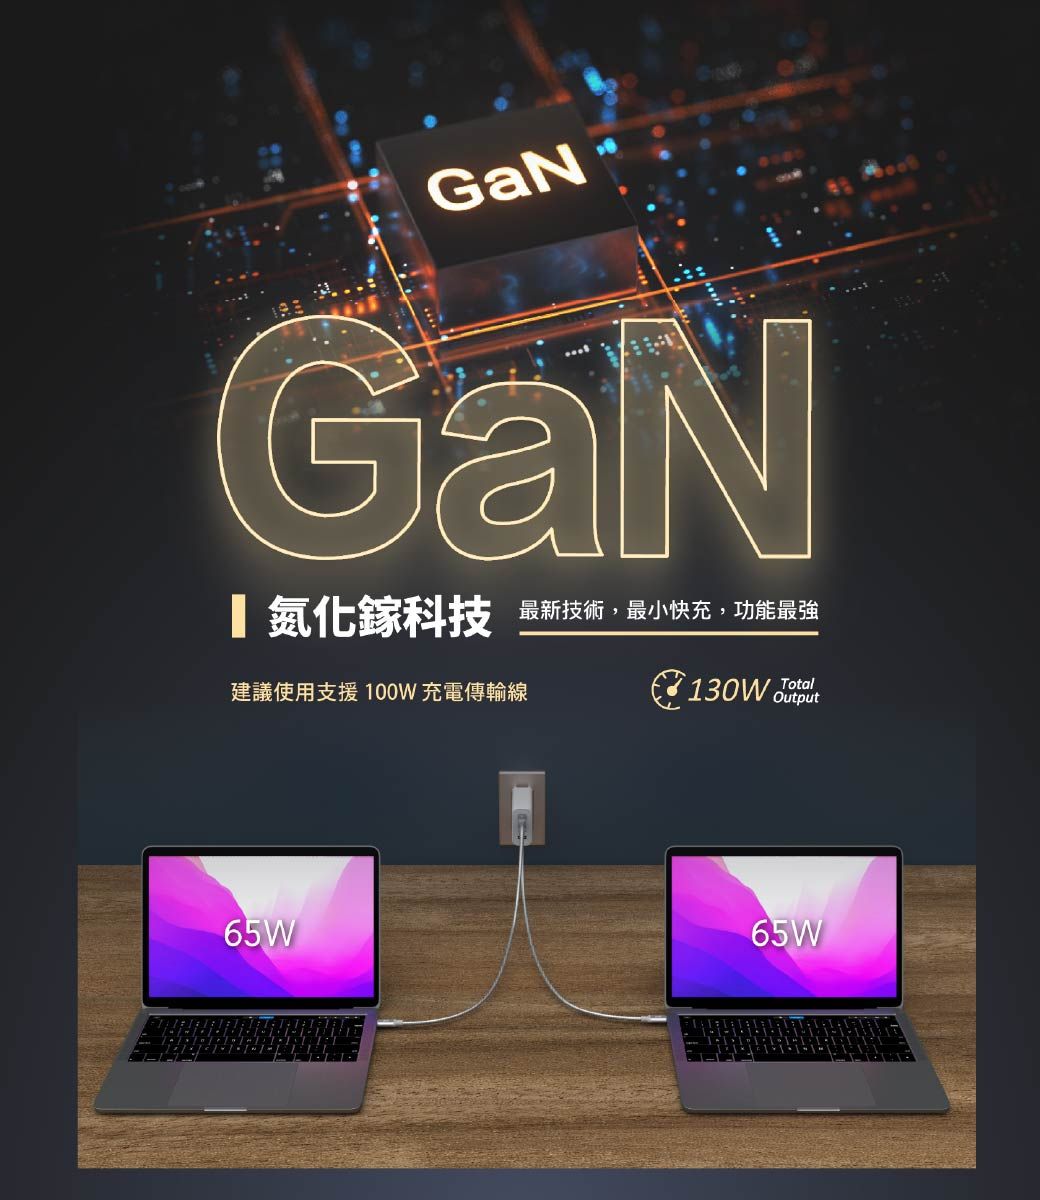 GaNGaN 氮化鎵科技最新技術,最小快充,功能最強建議使用支援 100W 充電傳輸線130W Output65W65W